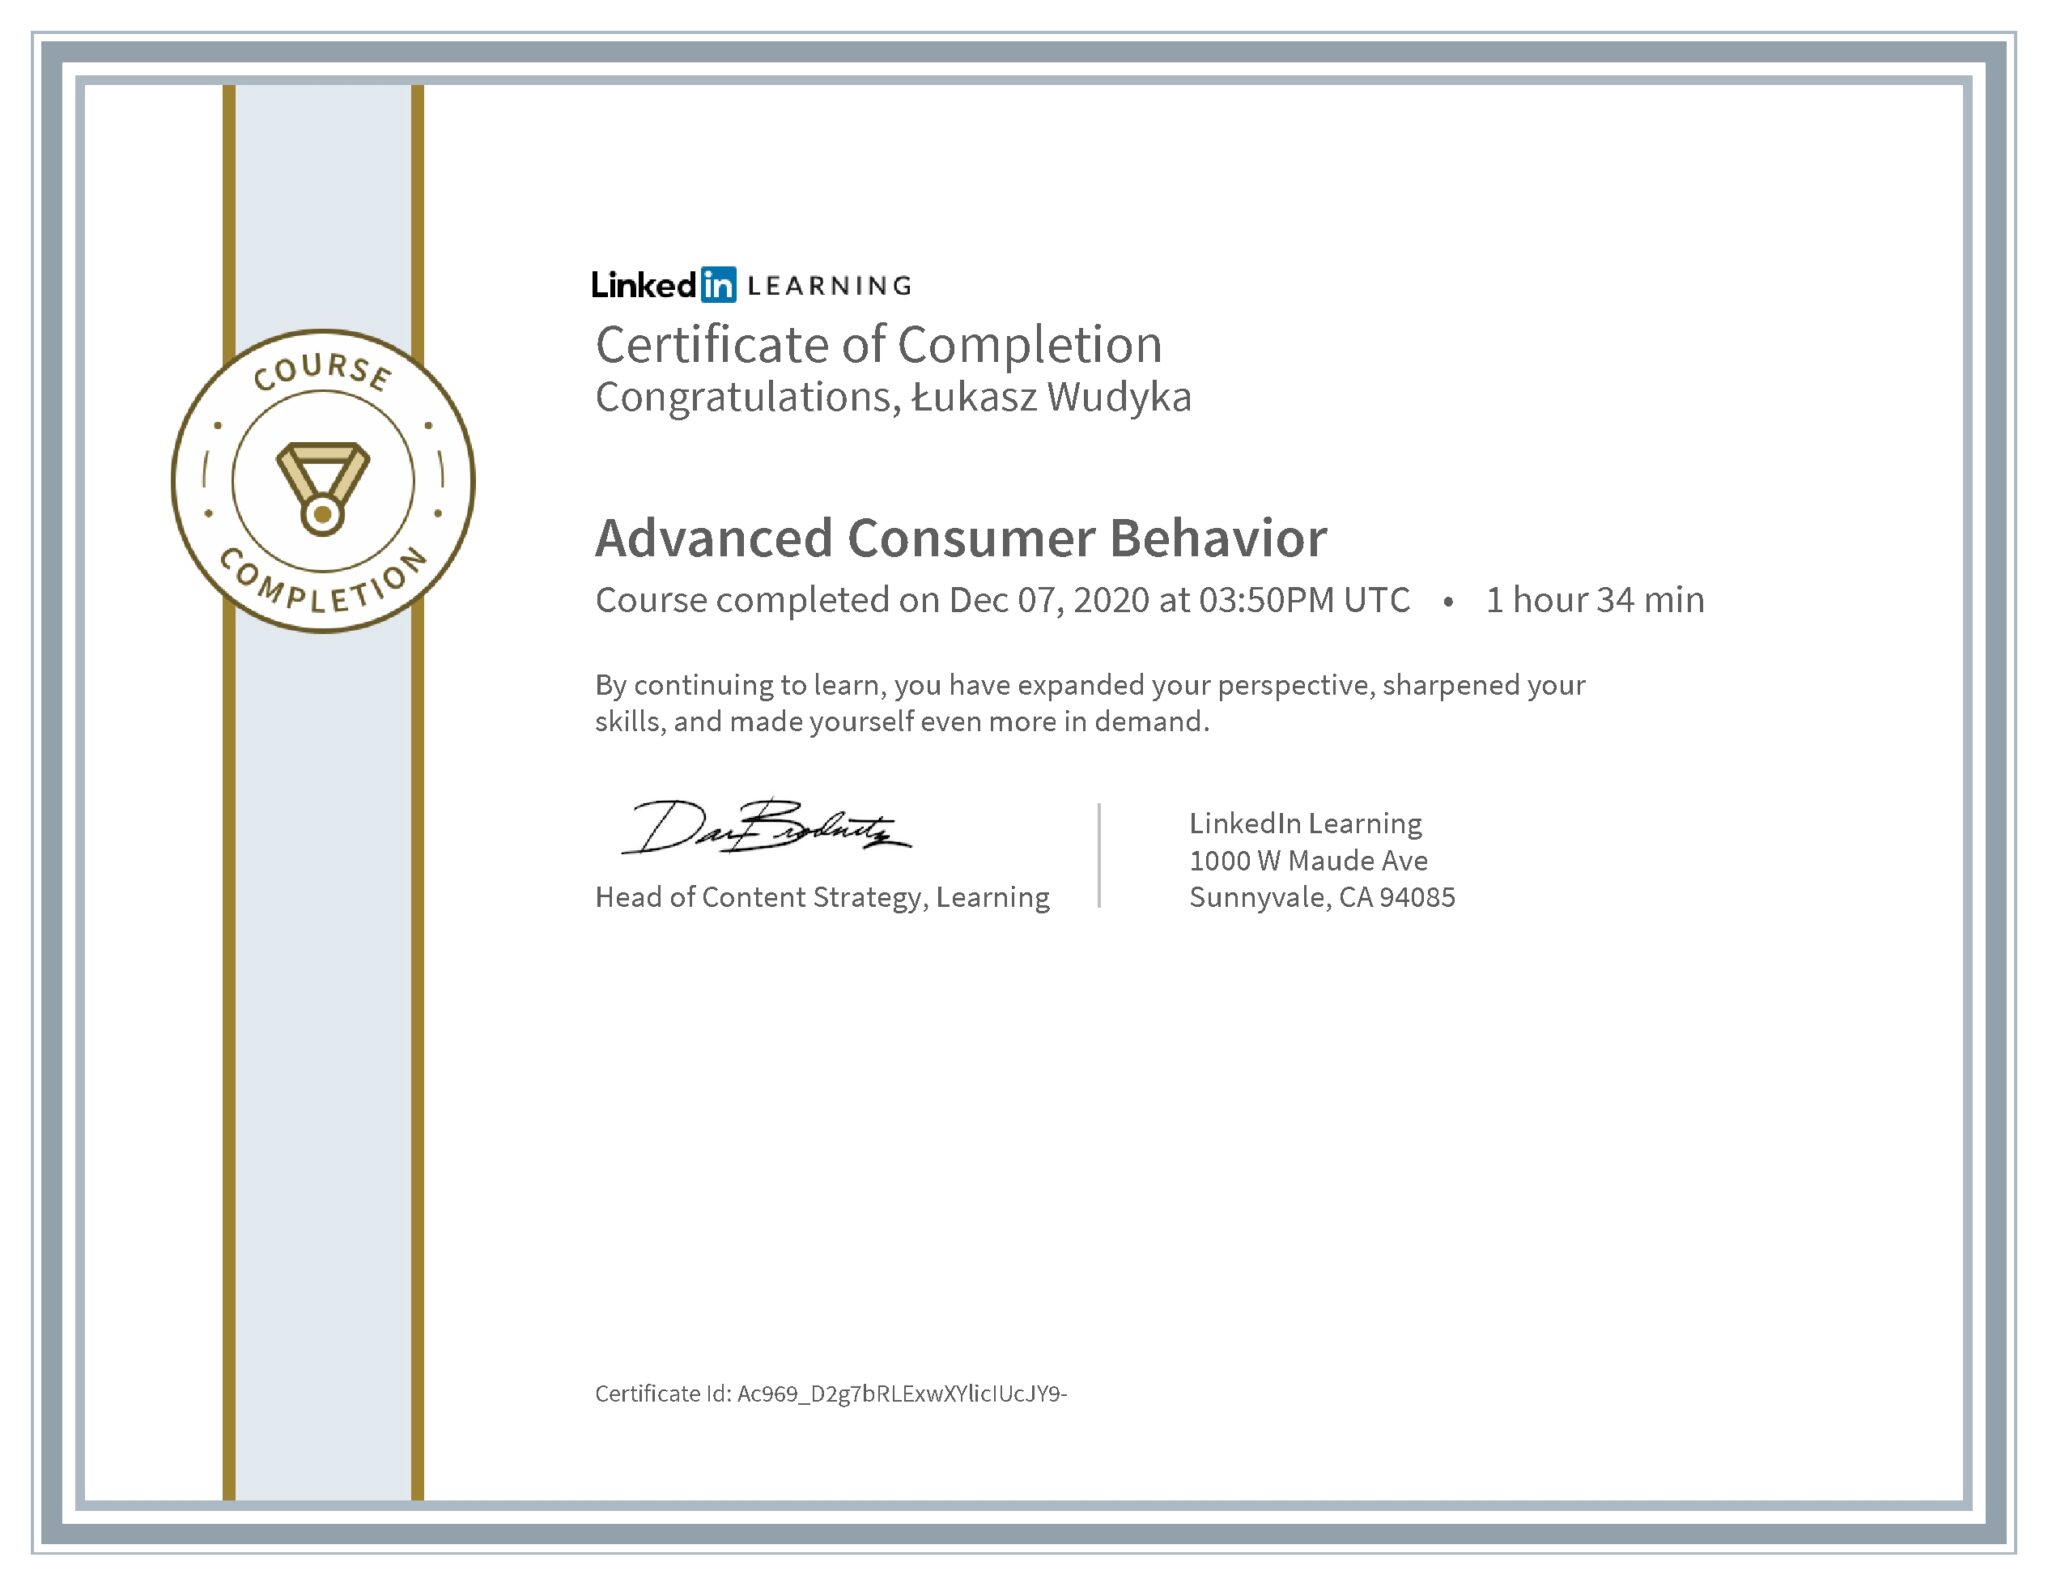 Łukasz Wudyka certyfikat LinkedIn Advanced Consumer Behavior